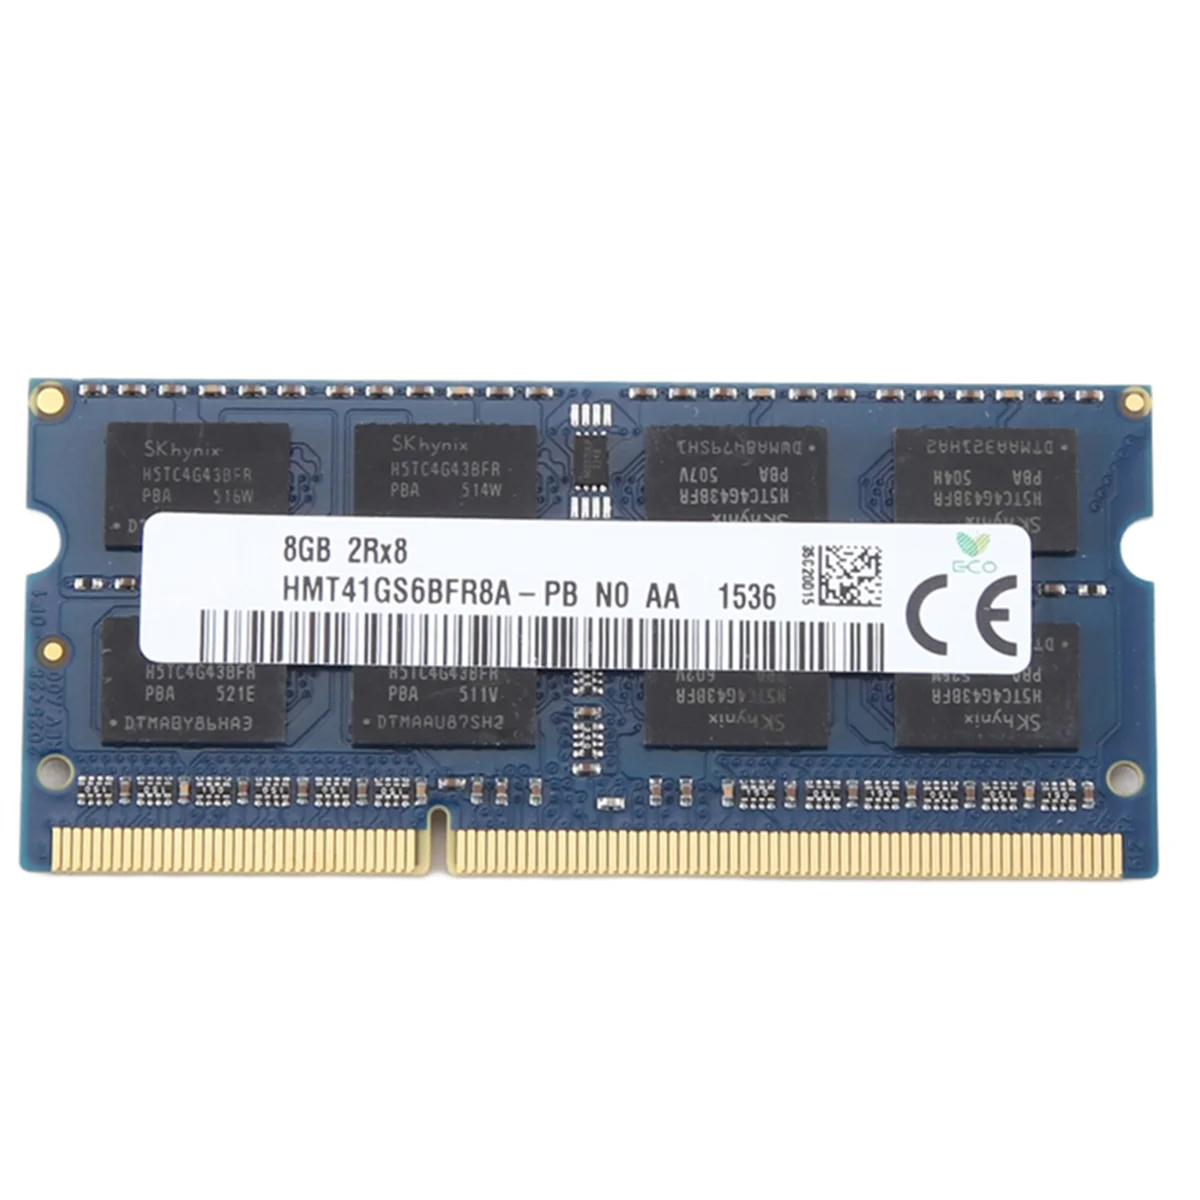 skirta SK Hynix 8GB DDR3 nešiojamojo kompiuterio ram atmintis 2RX8 1333Mhz PC3-10600 204 kaiščiai 1.35V SODIMM nešiojamojo kompiuterio atminties ram Nuotrauka 3